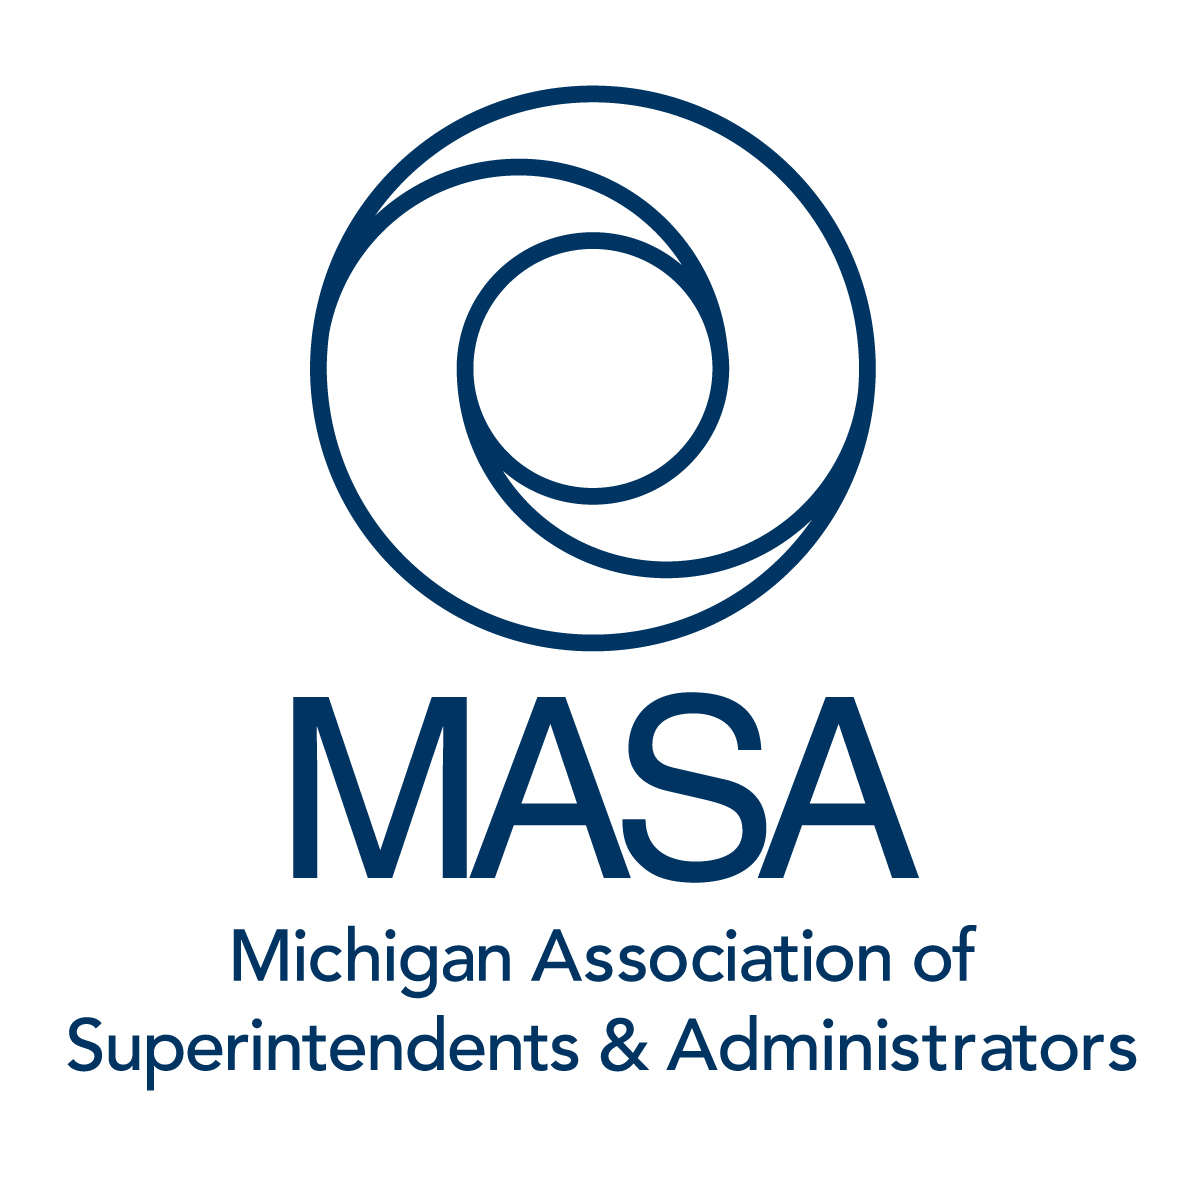 Michigan Association of Superintendents and Administrators logo